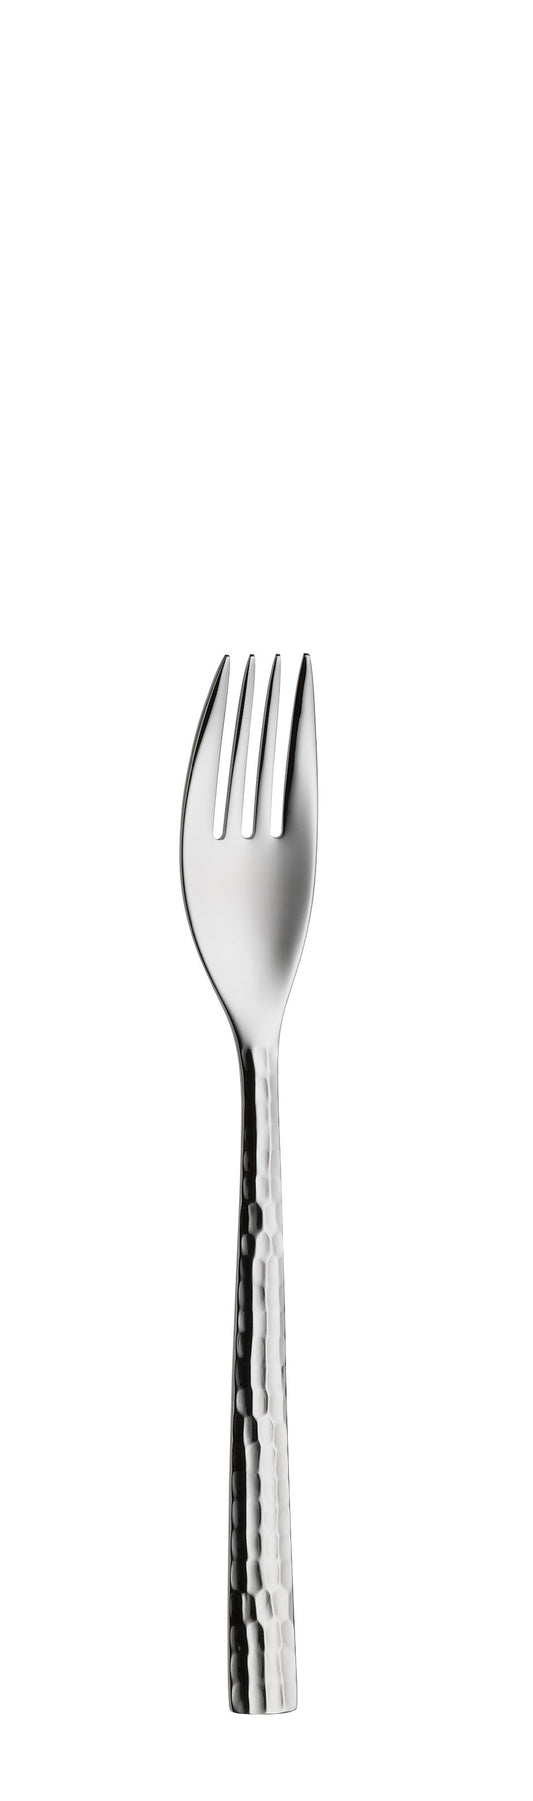 Dessert fork 4 prongs LENISTA silverplated 158mm